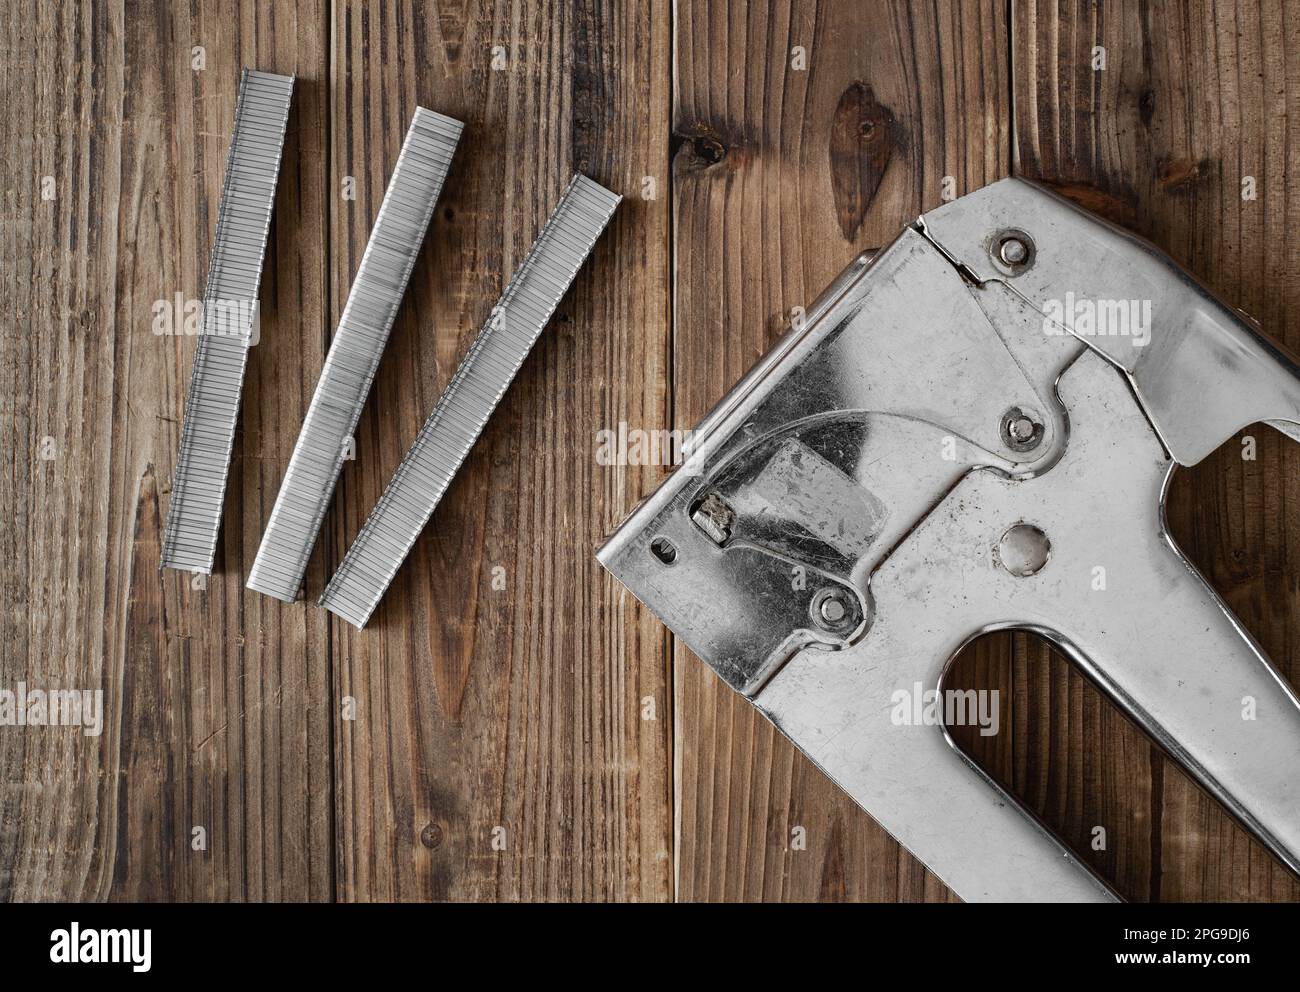 Overhead view of industrial staple gun on wood Stock Photo